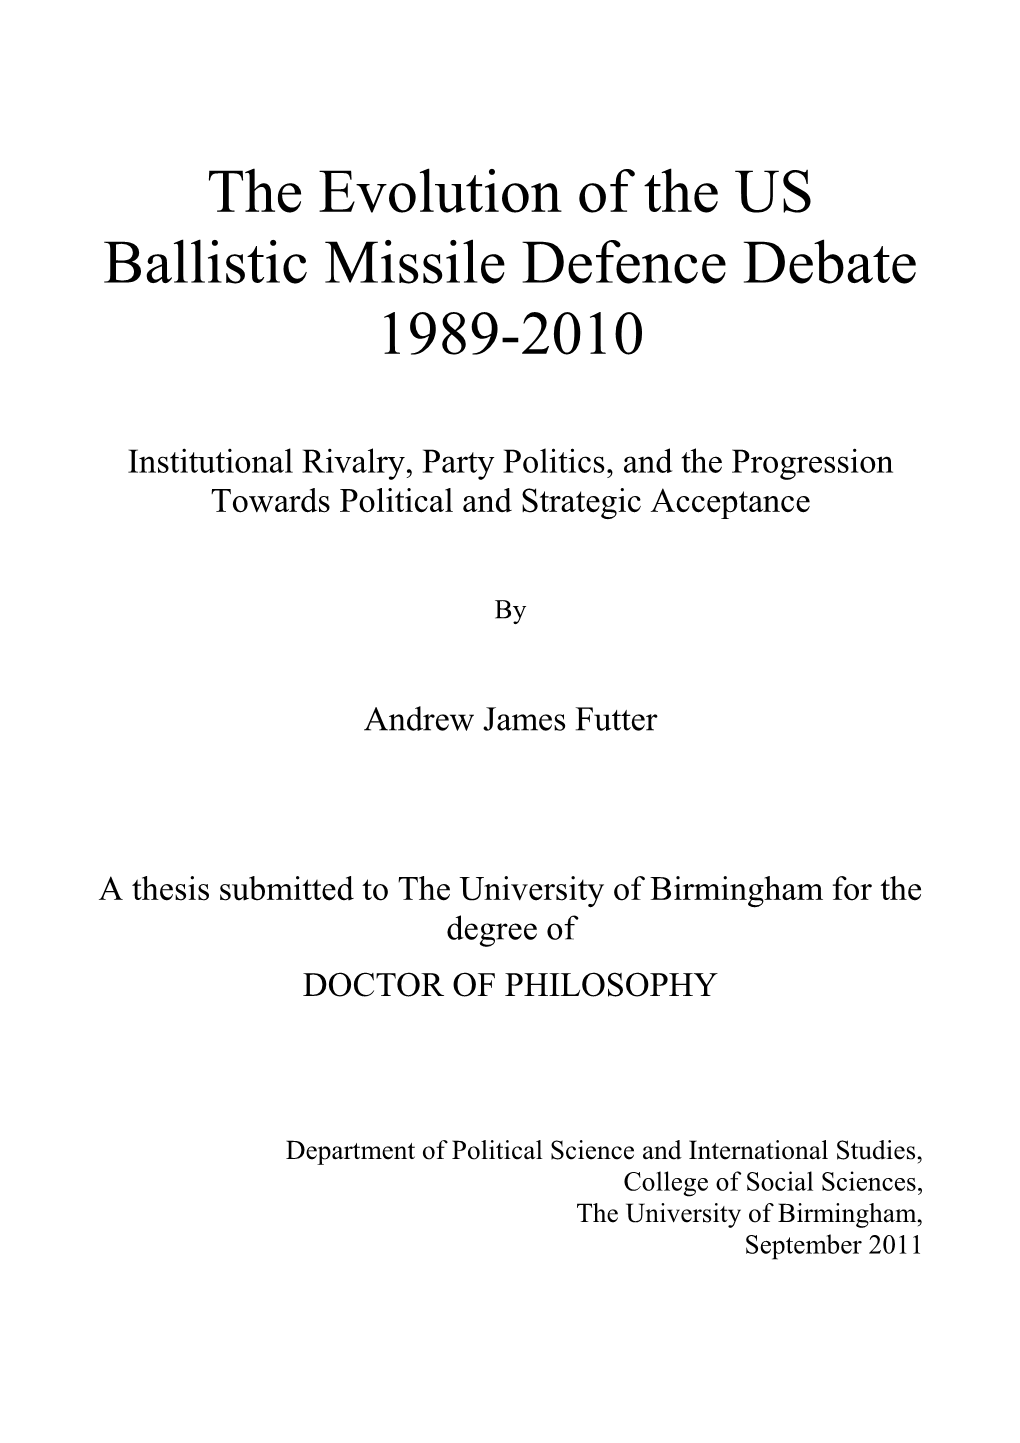 The Evolution of the US Ballistic Missile Defence Debate 1989-2010